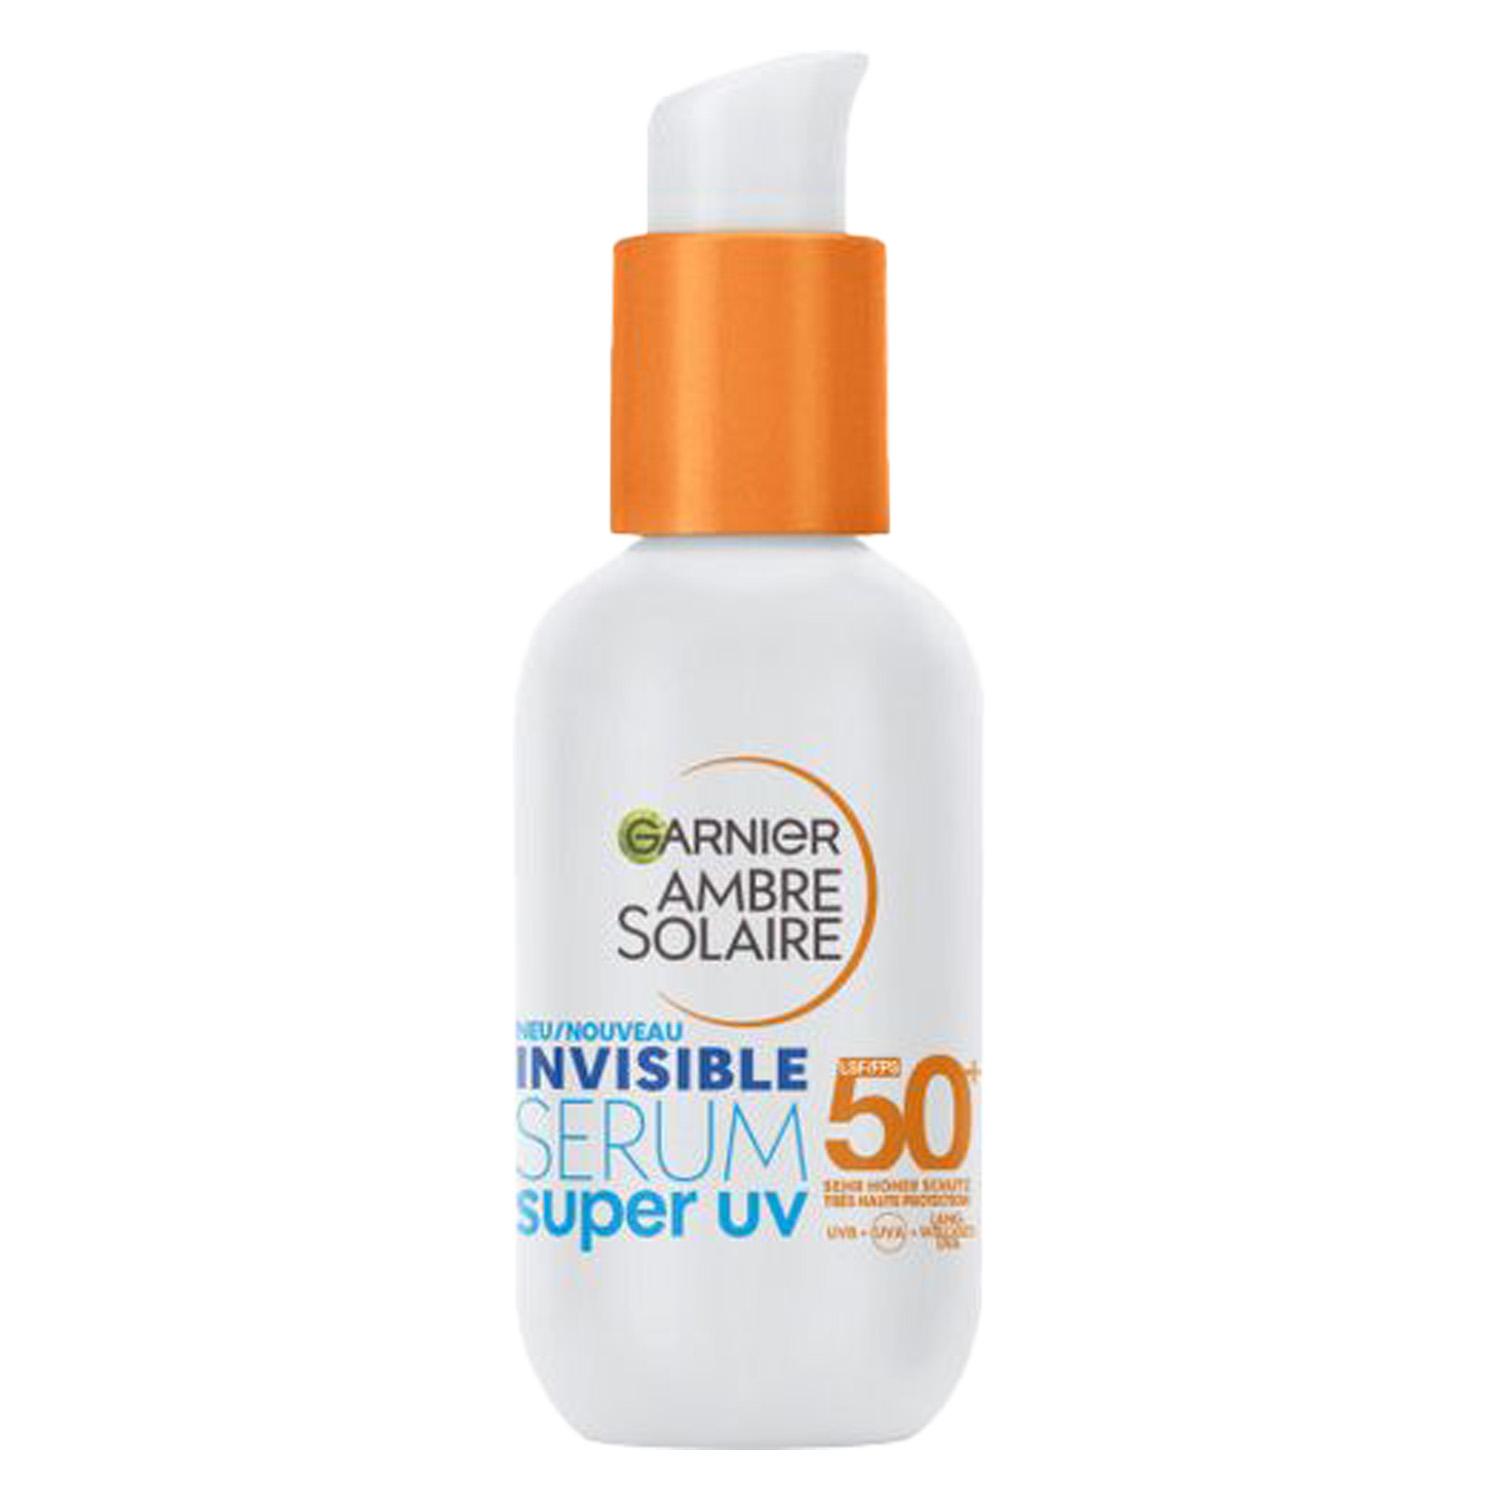 Ambre Solaire - Invisible Serum Super UV Sérum de protection solaire SPF 50